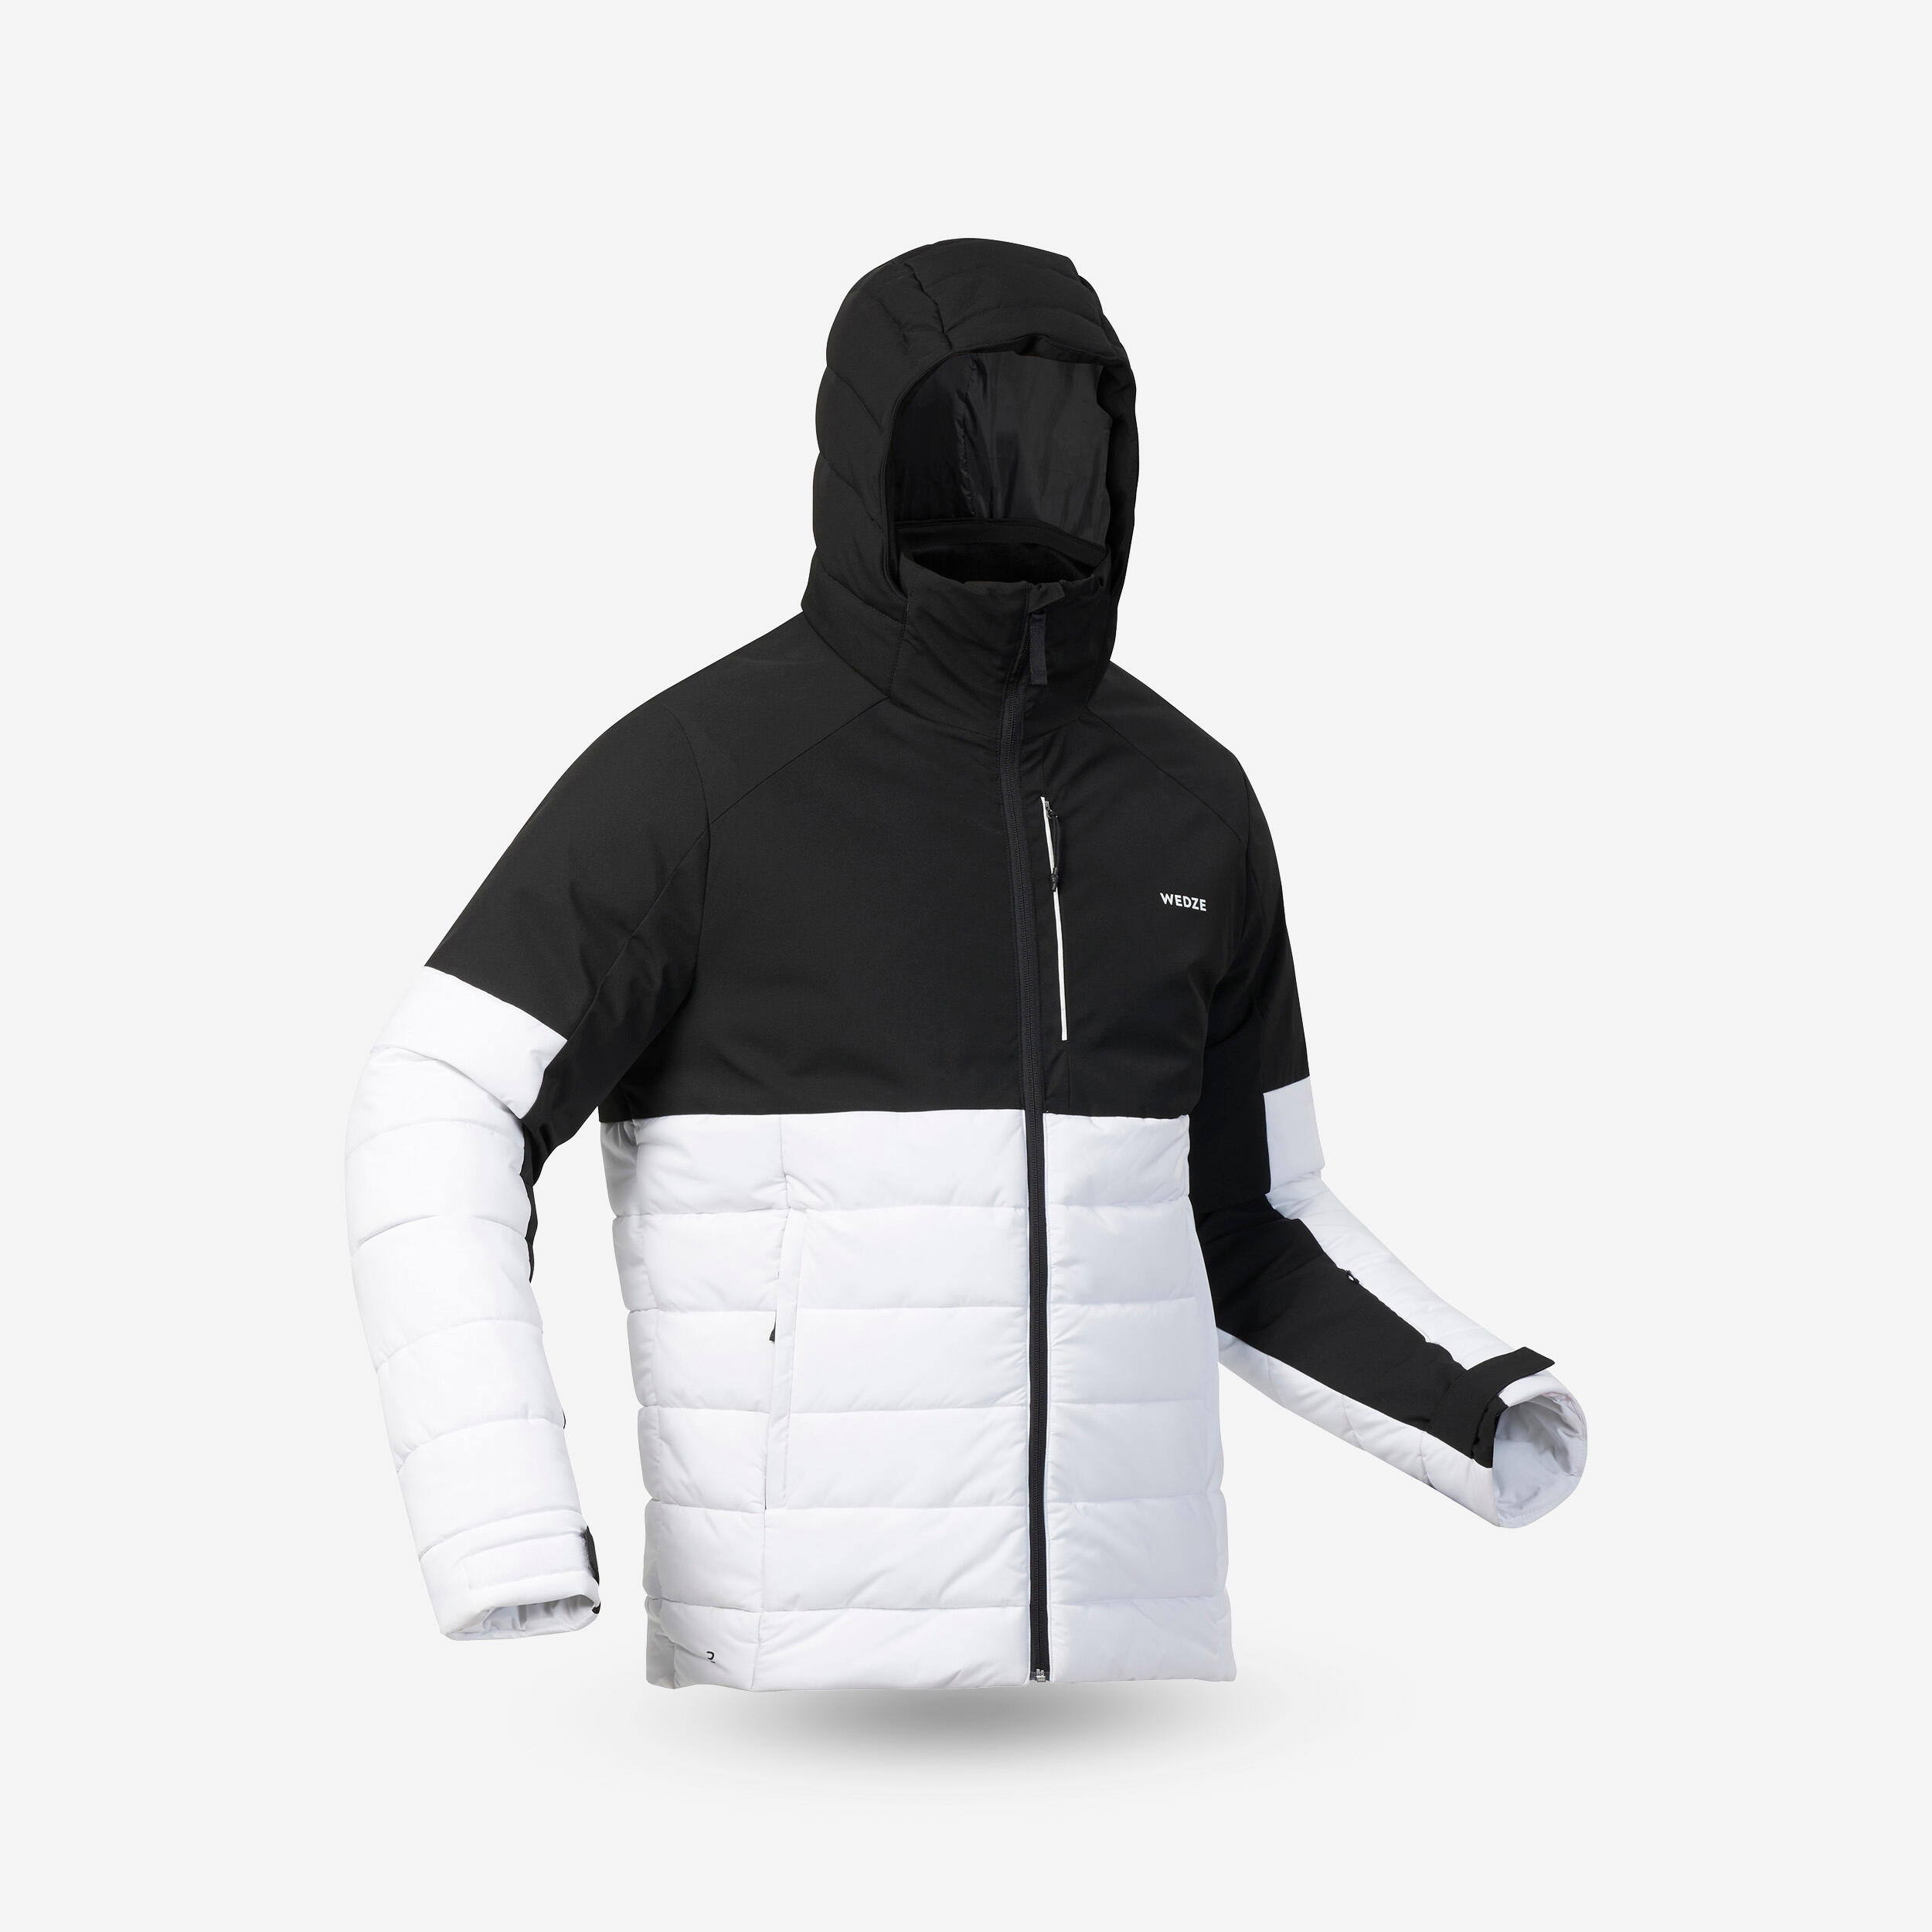 WEDZE Men's Mid-Length Warm Ski Jacket 100 - Black/White